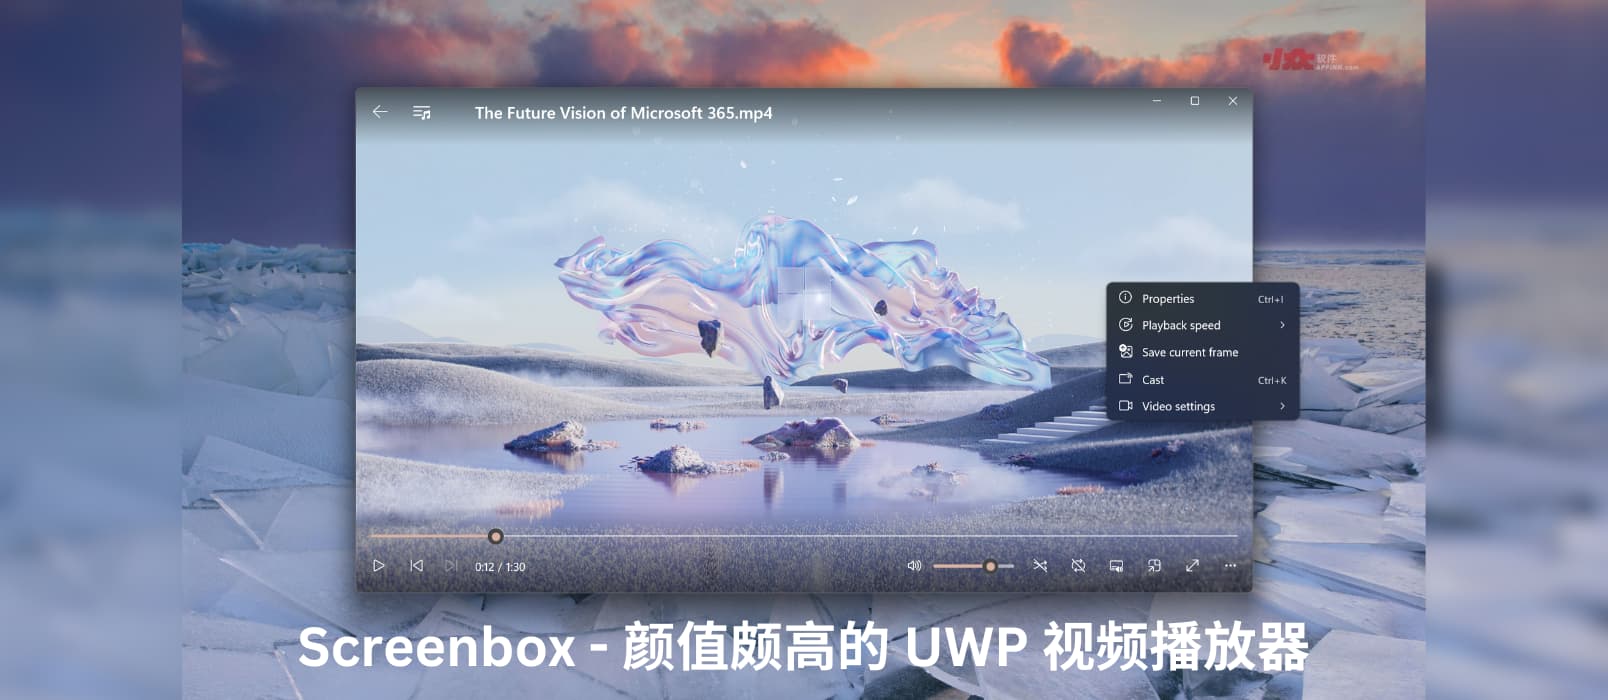 Screenbox - 基于 VLC，颜值颇高的开源、免费 UWP 视频播放器[Windows/Xbox]